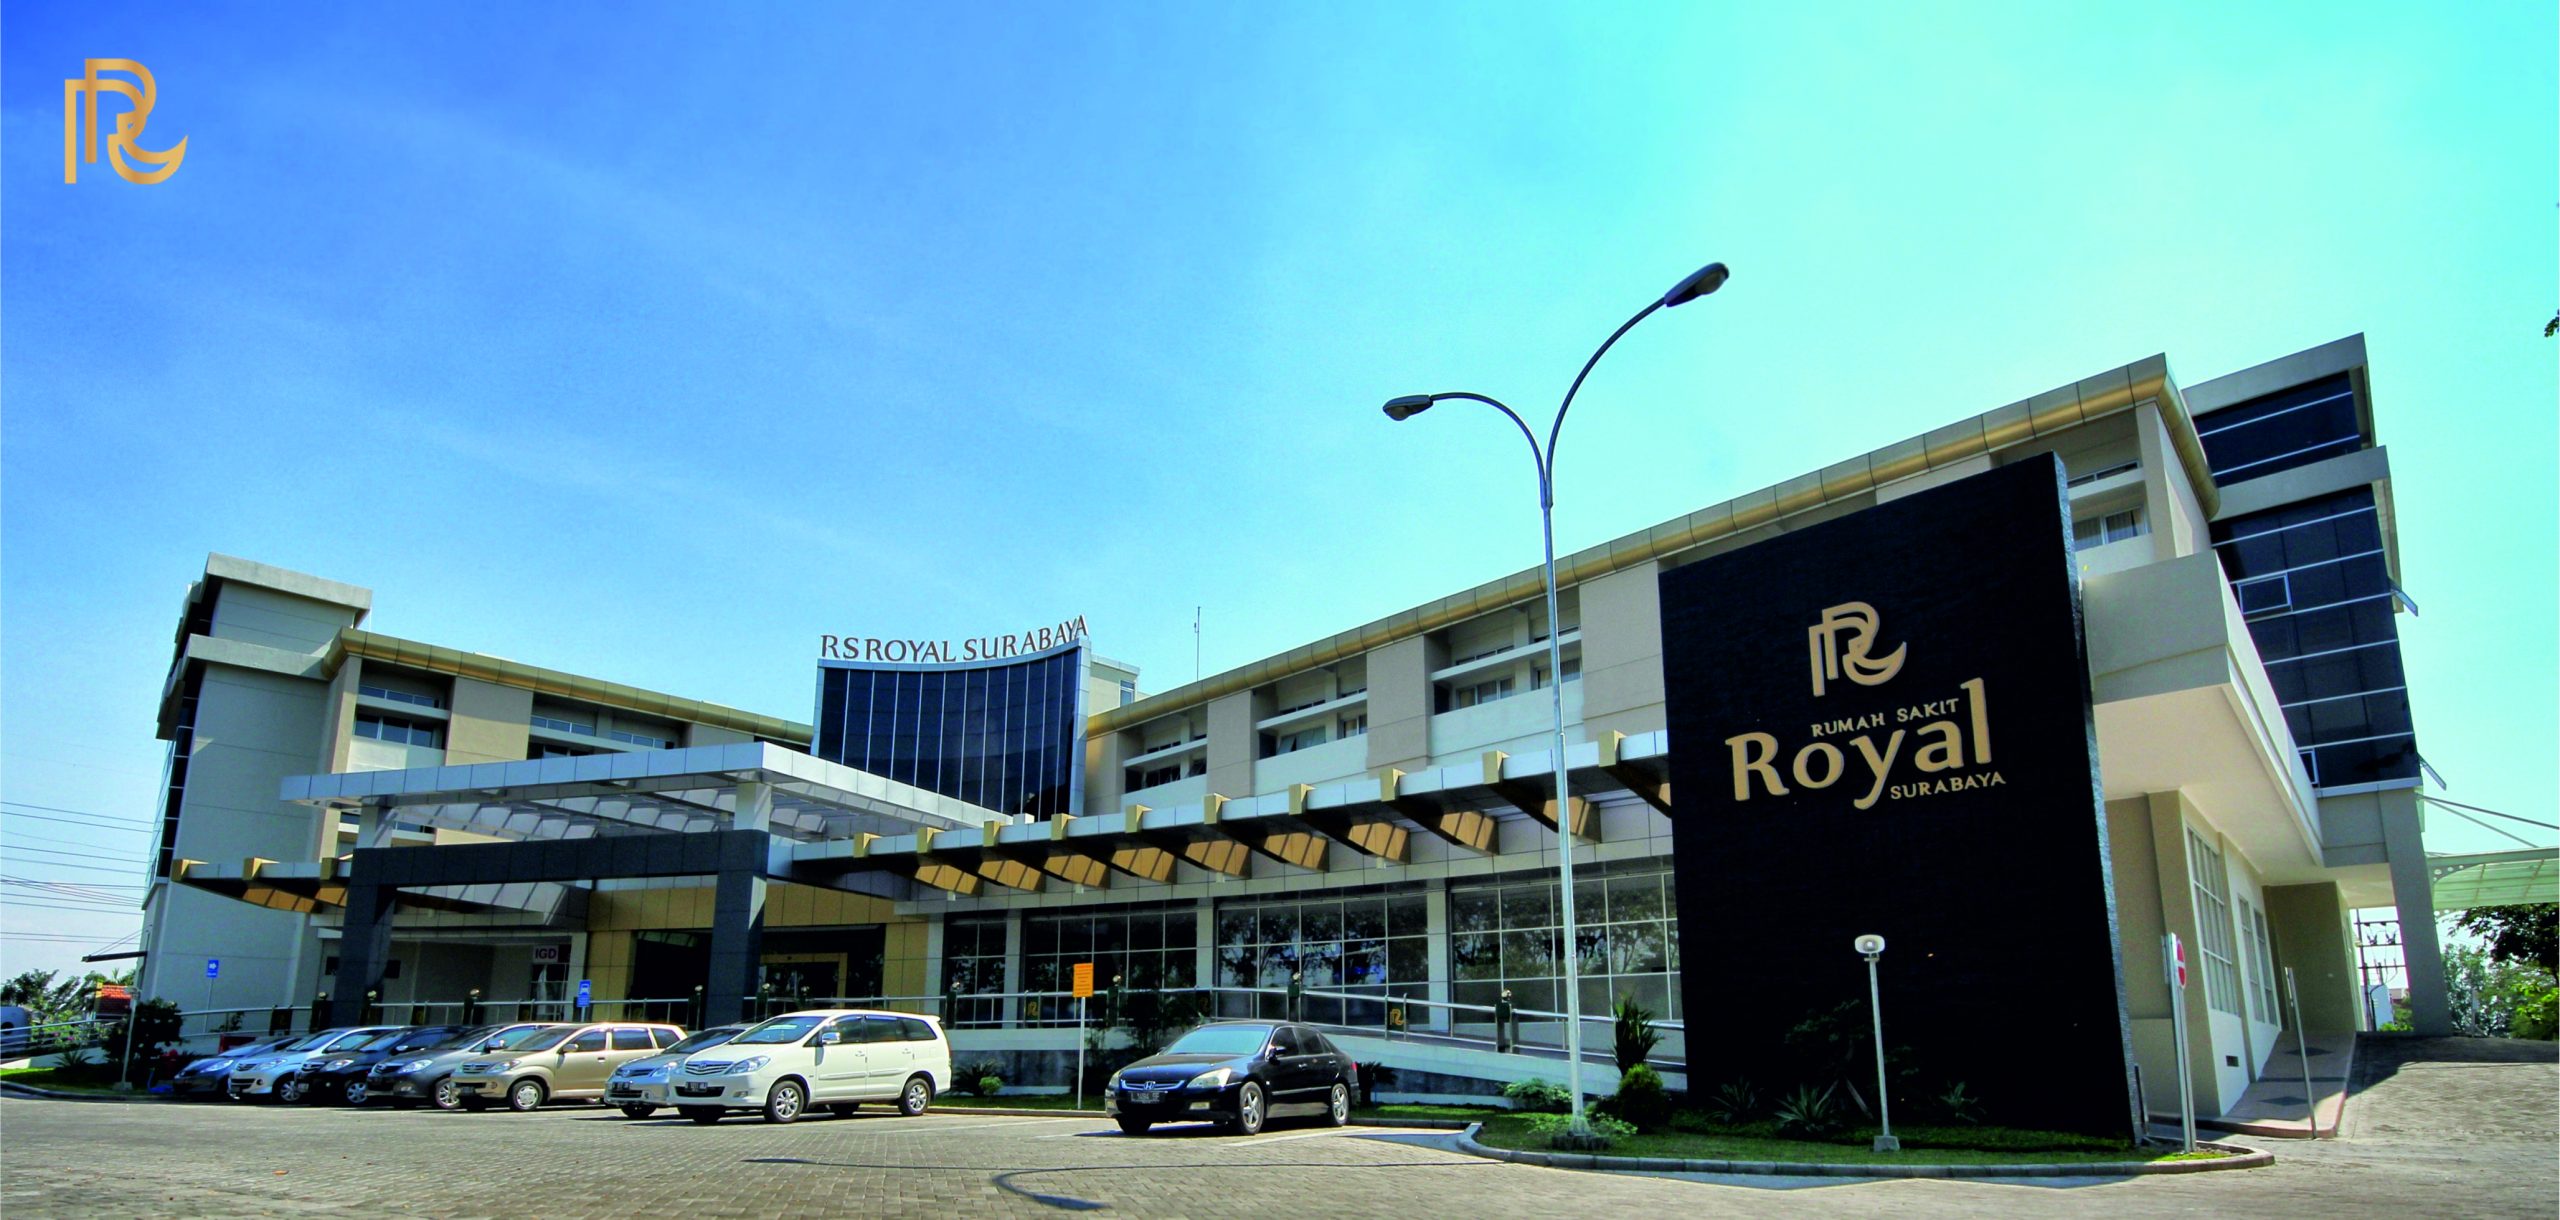 Rumah Sakit Royal Surabaya